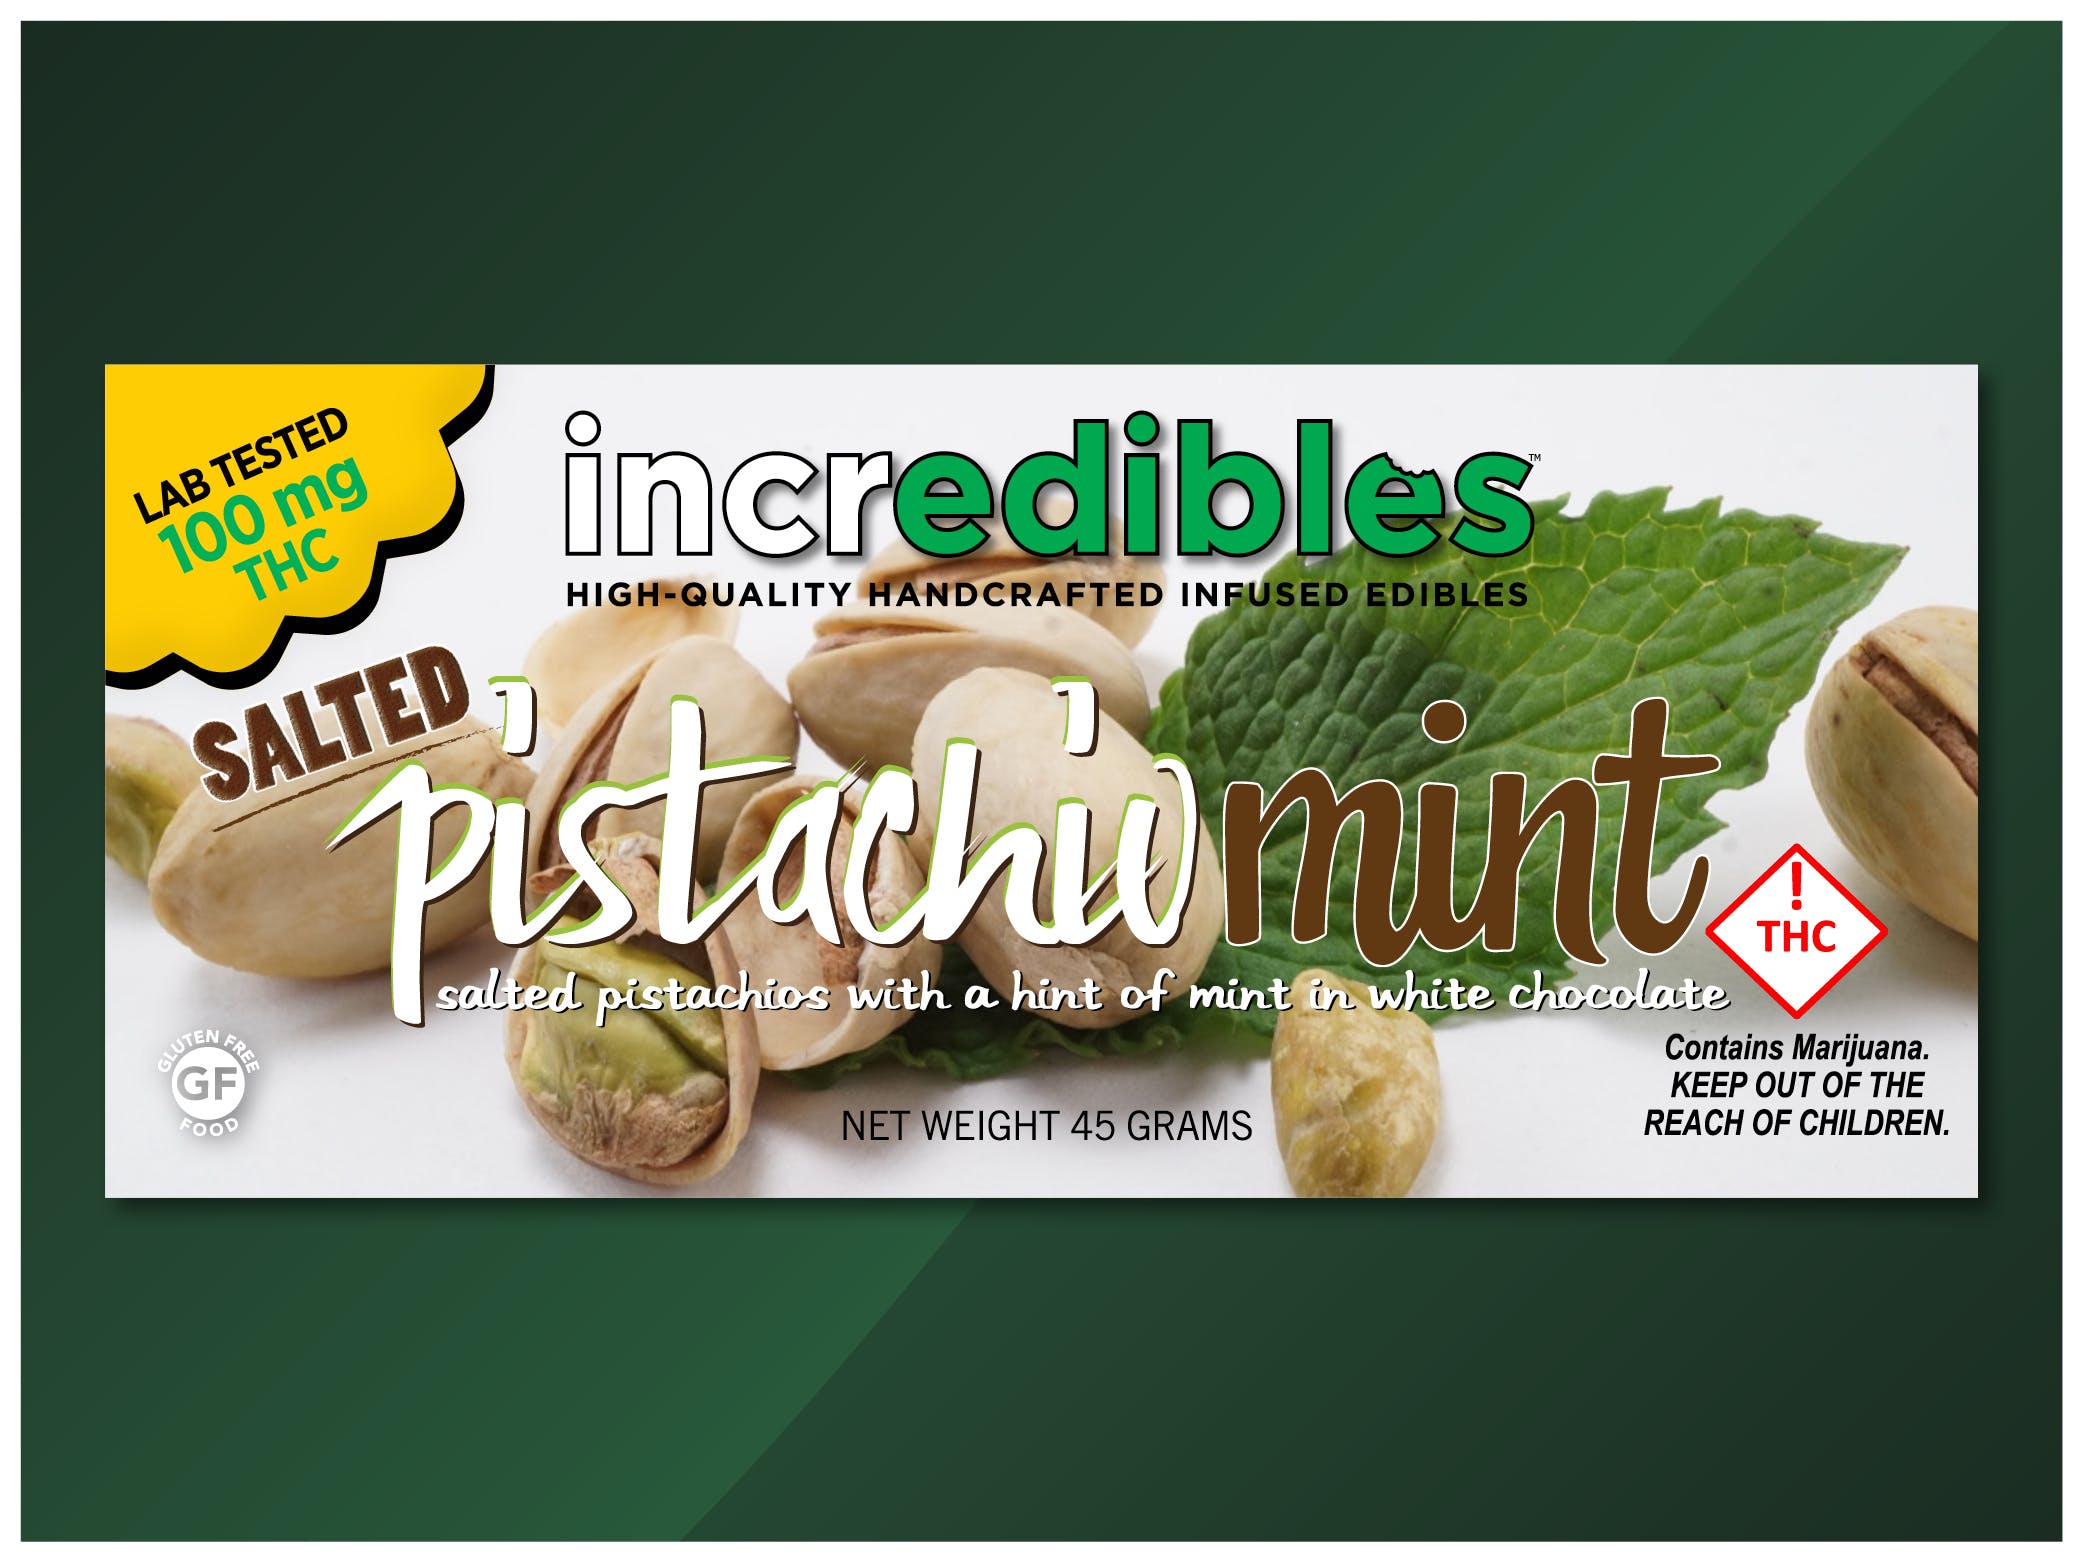 edible-incredibles-incredibles-salted-pistachio-mint-bar